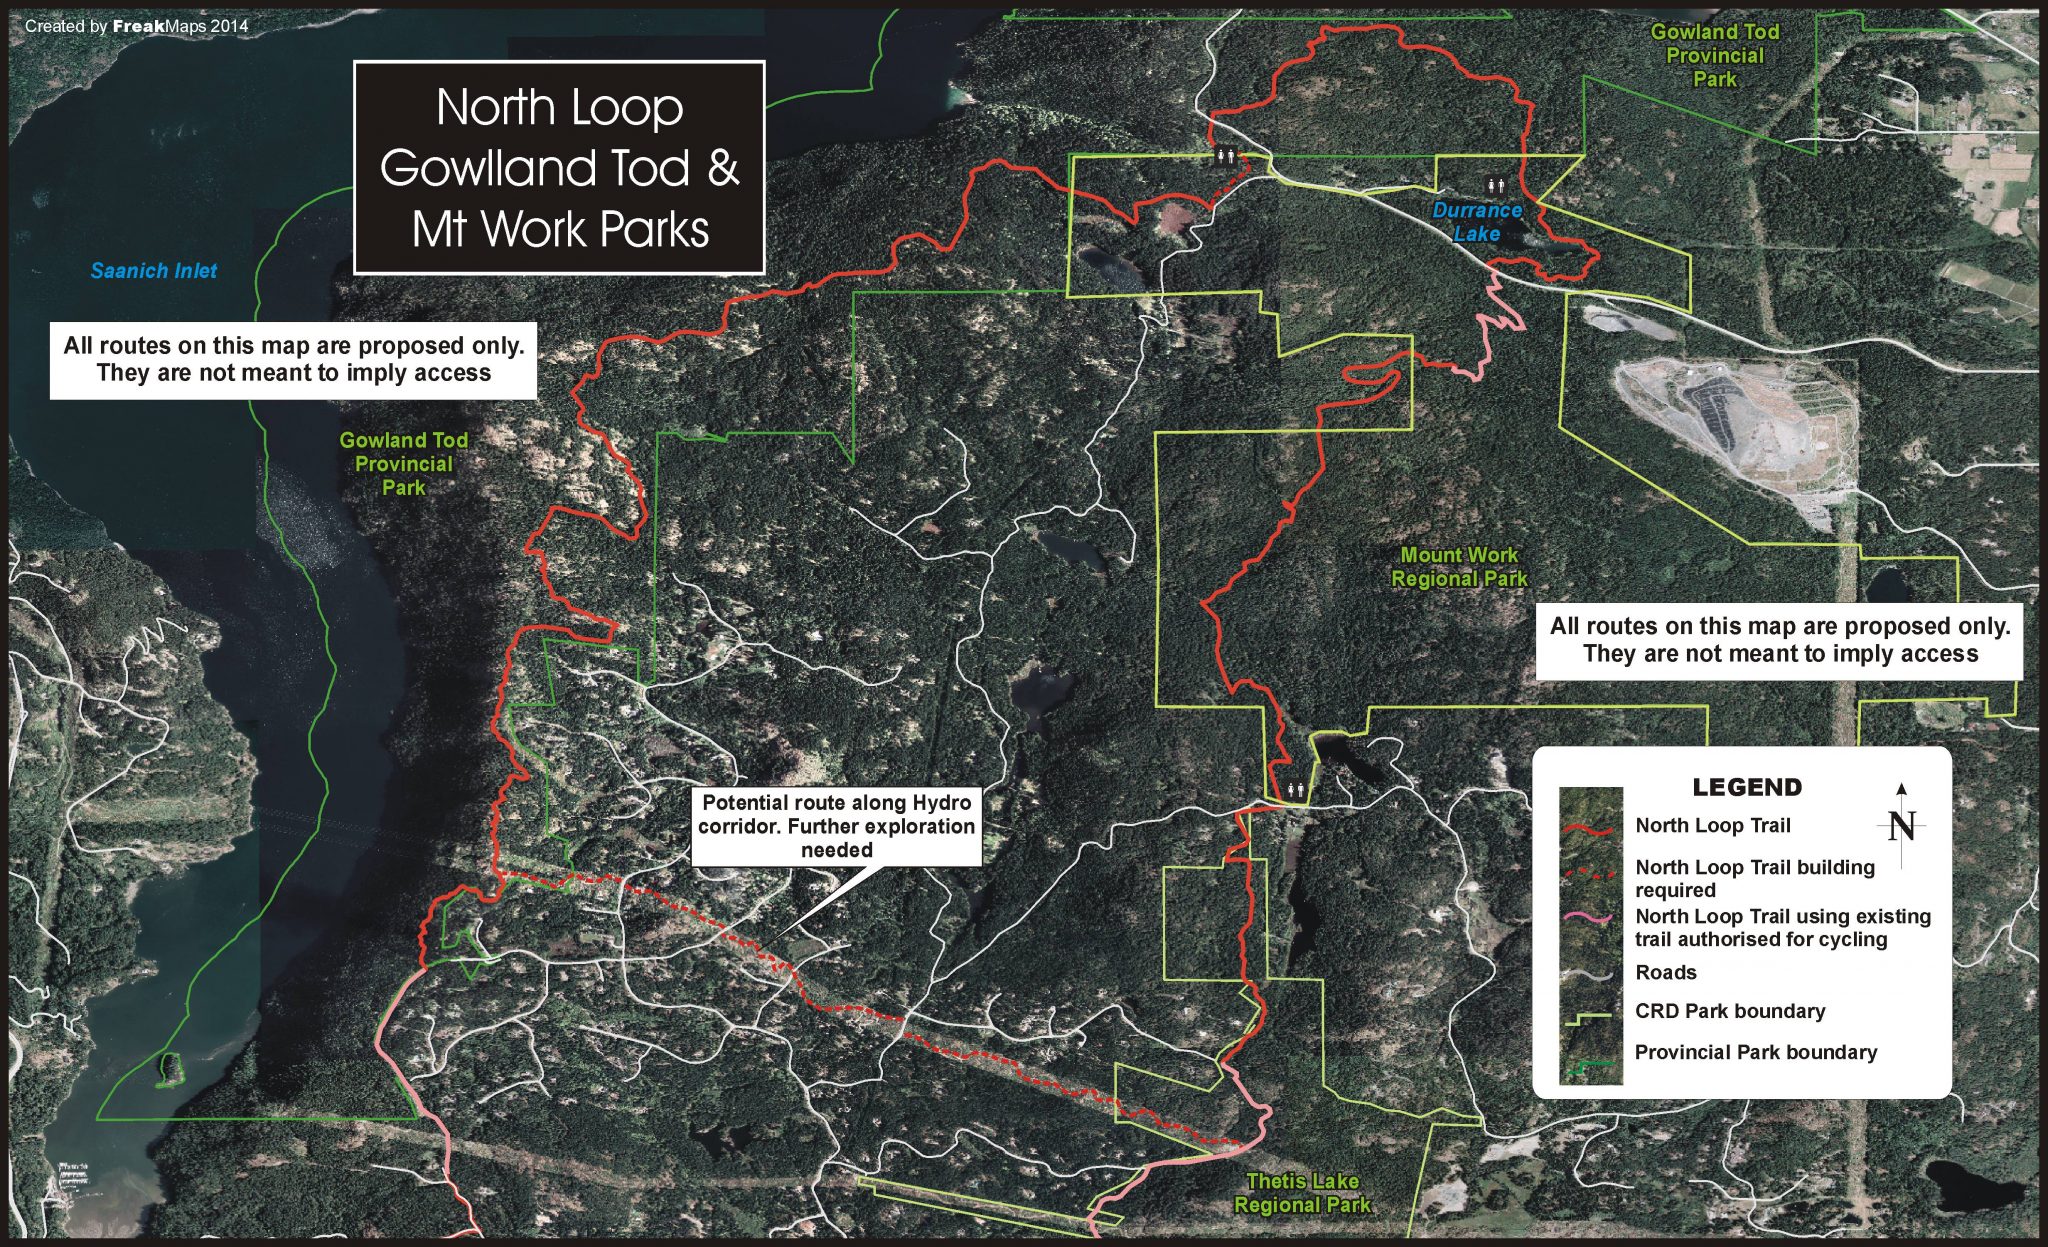 North-Loop-Gowlland-Tod-and-Mt-Work